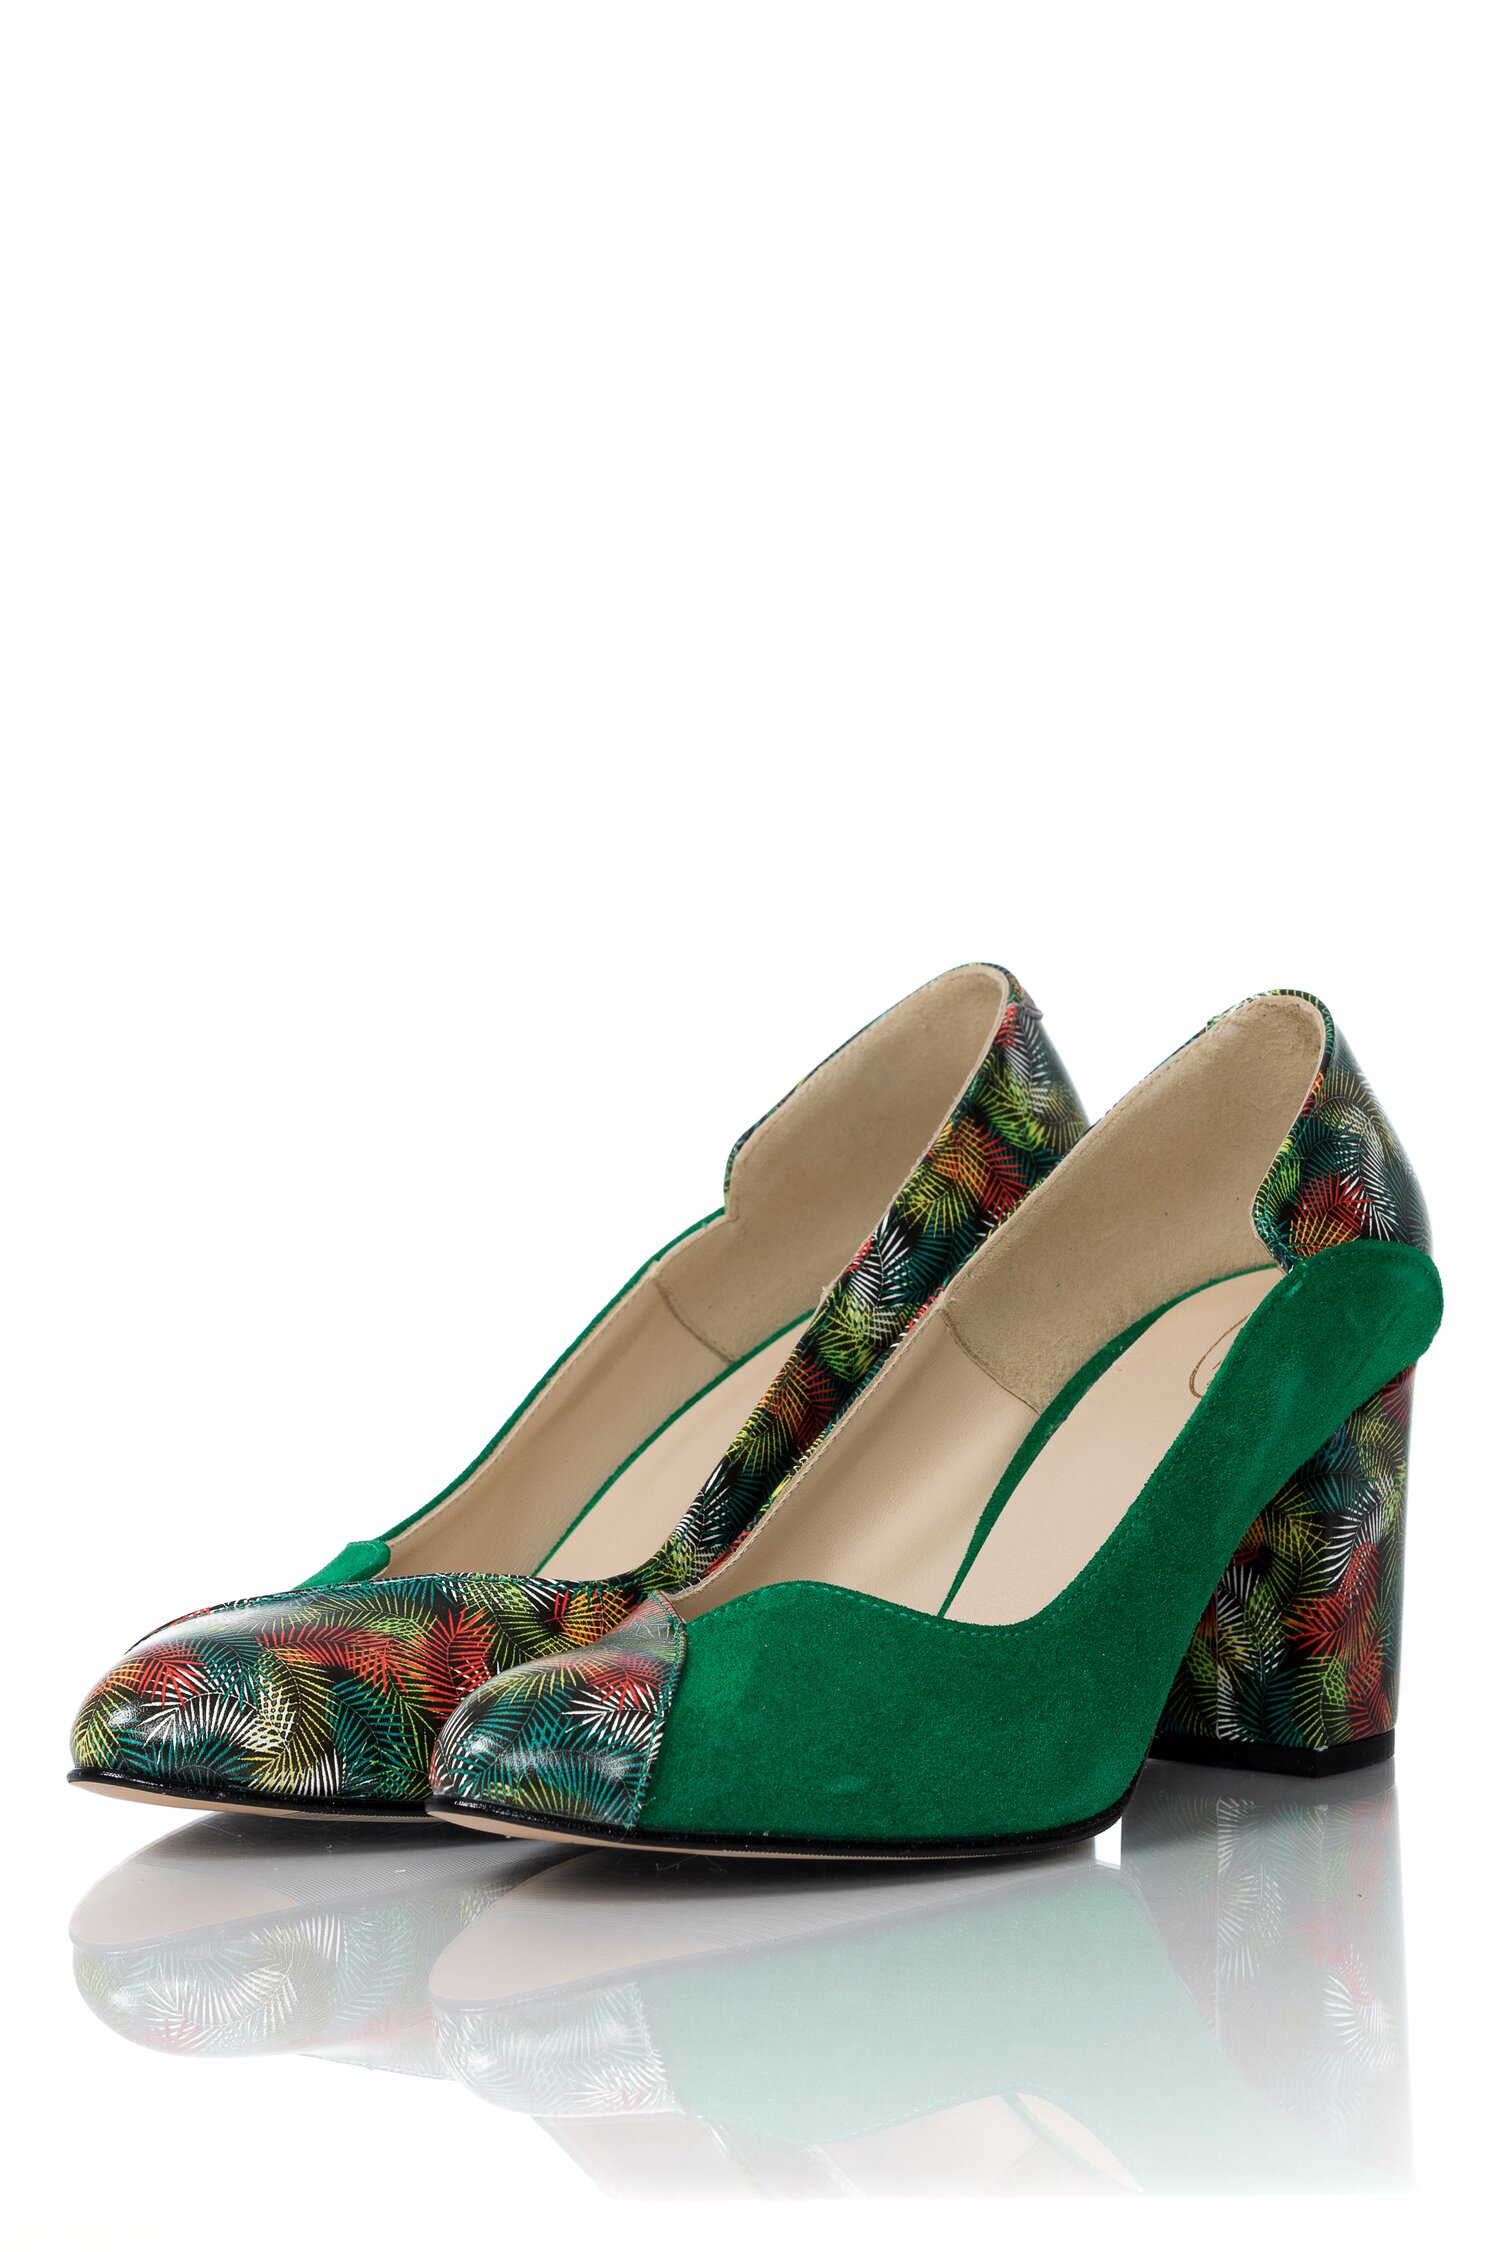 Pantofi Mara verzi cu imprimeu floral dyfashion.ro